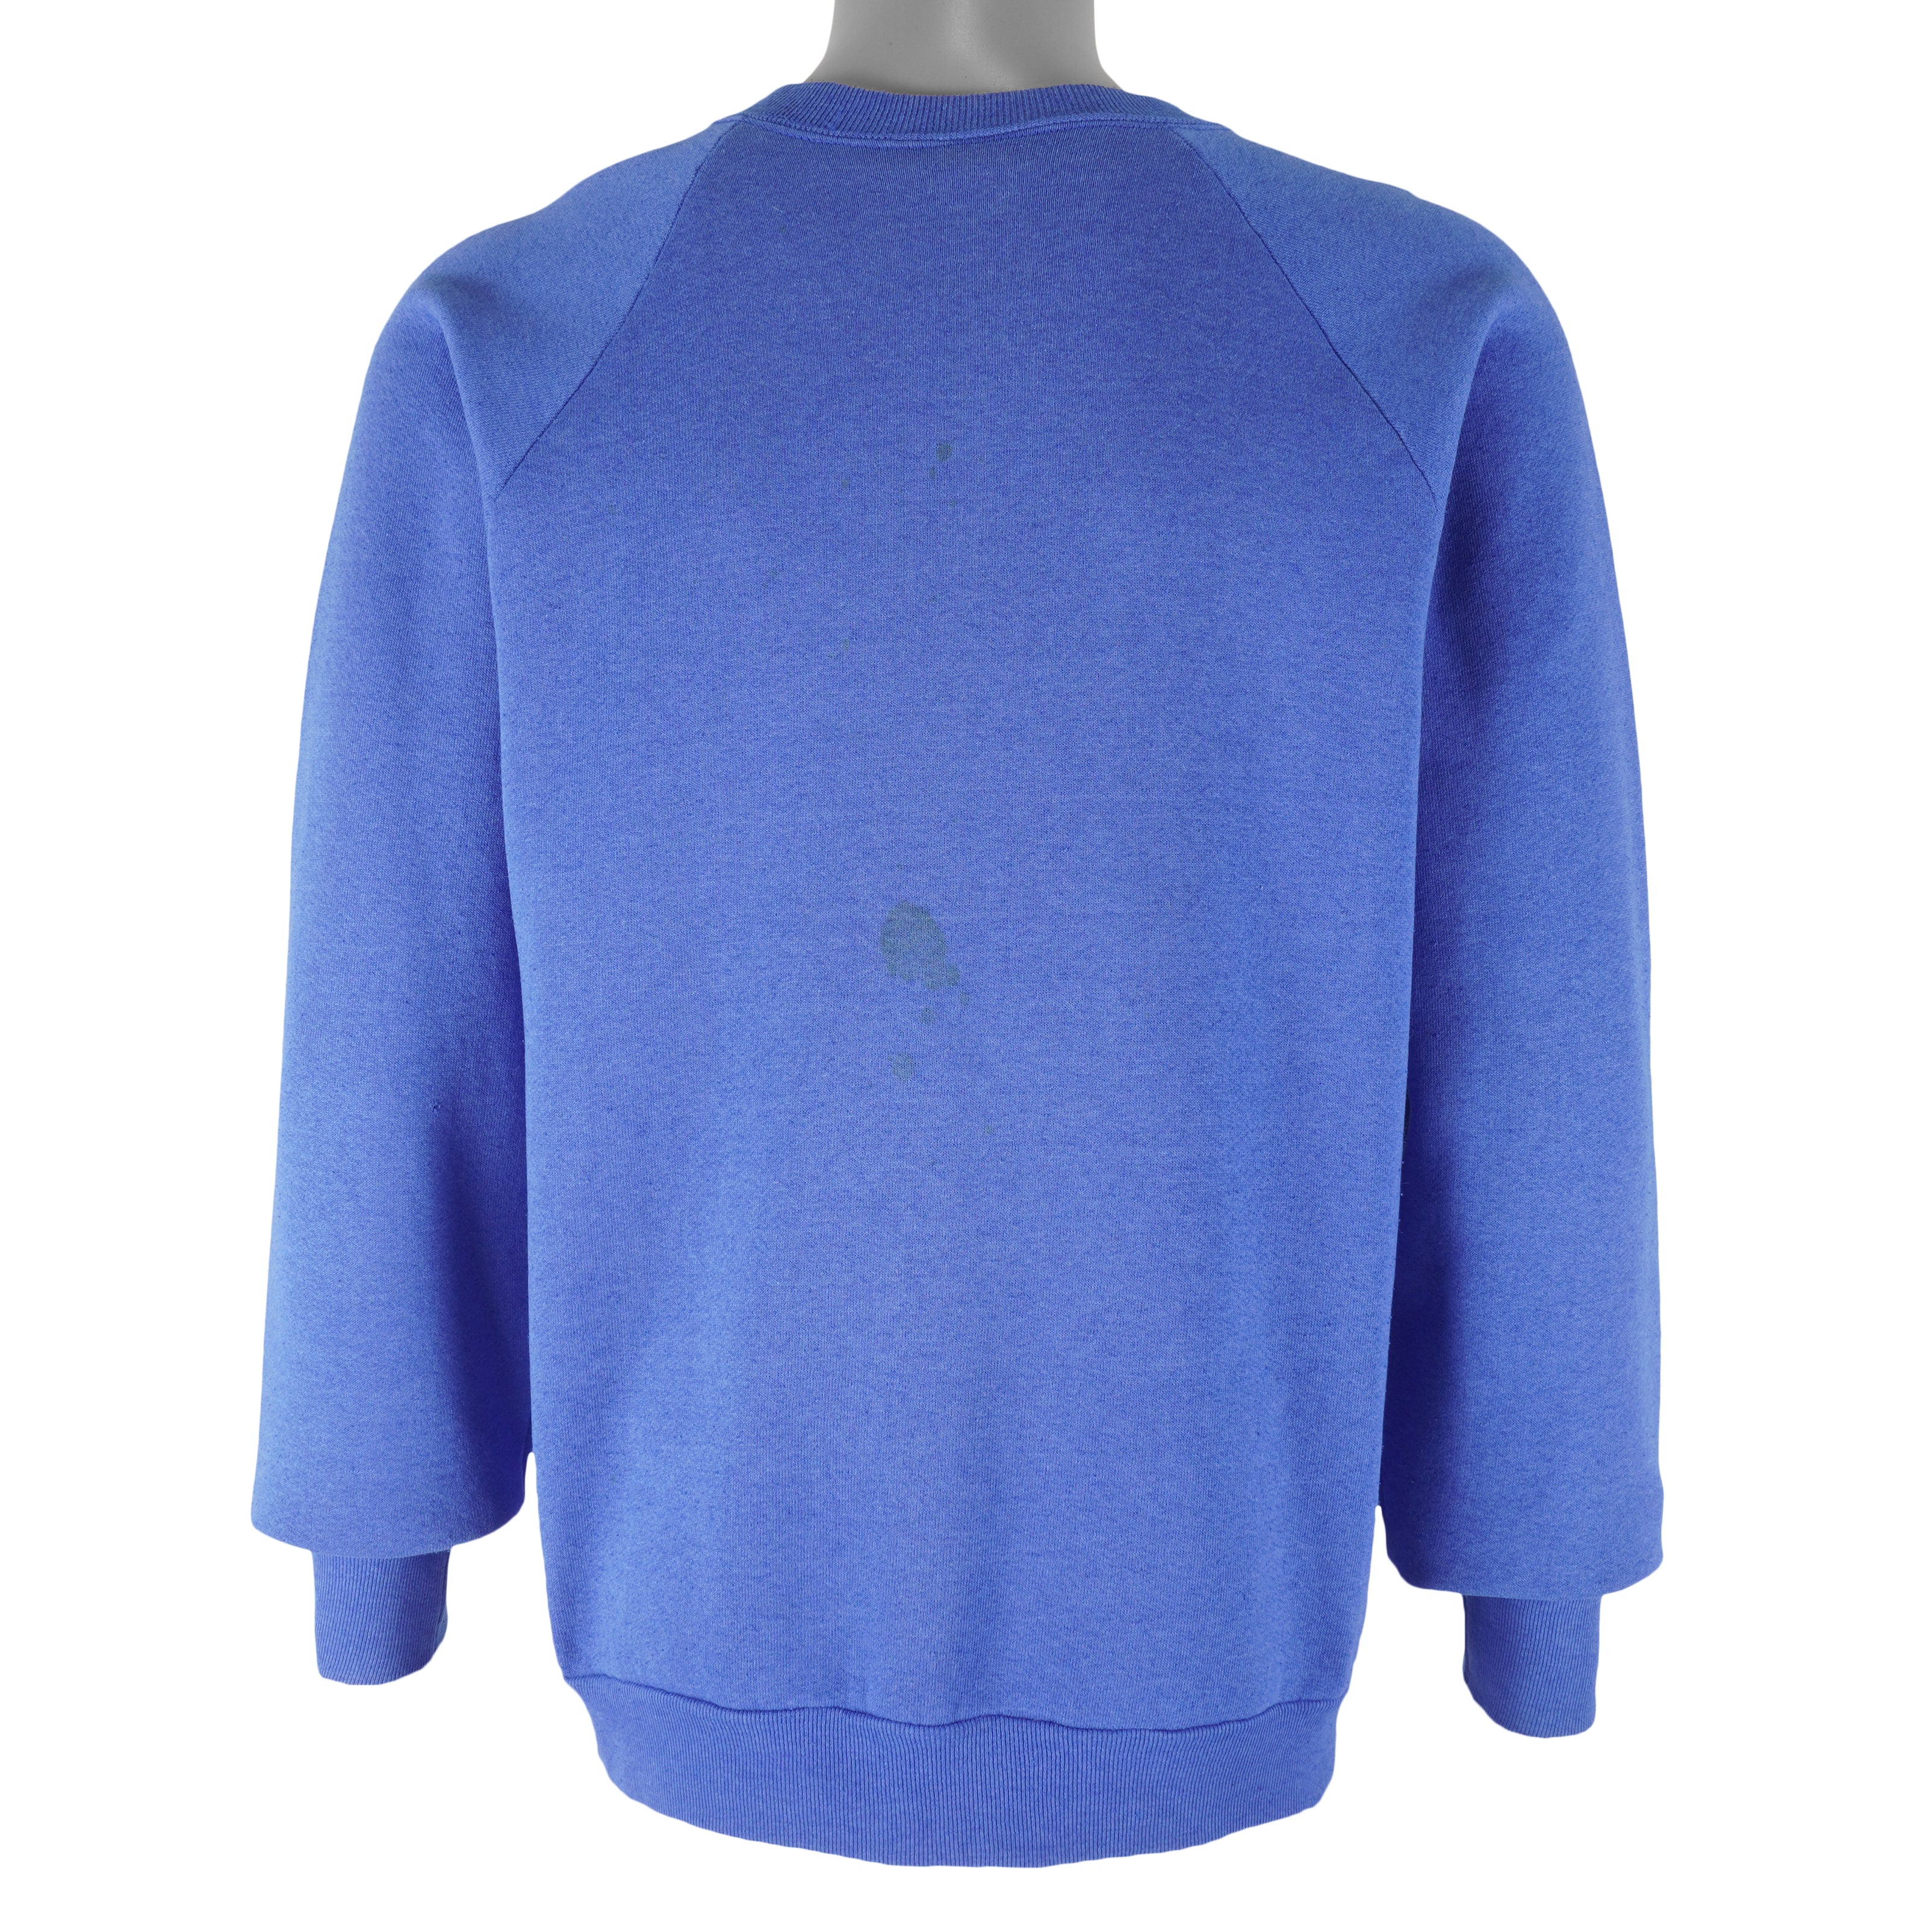 Buffalo Blue Jays baseball shirt, hoodie, sweater, long sleeve and